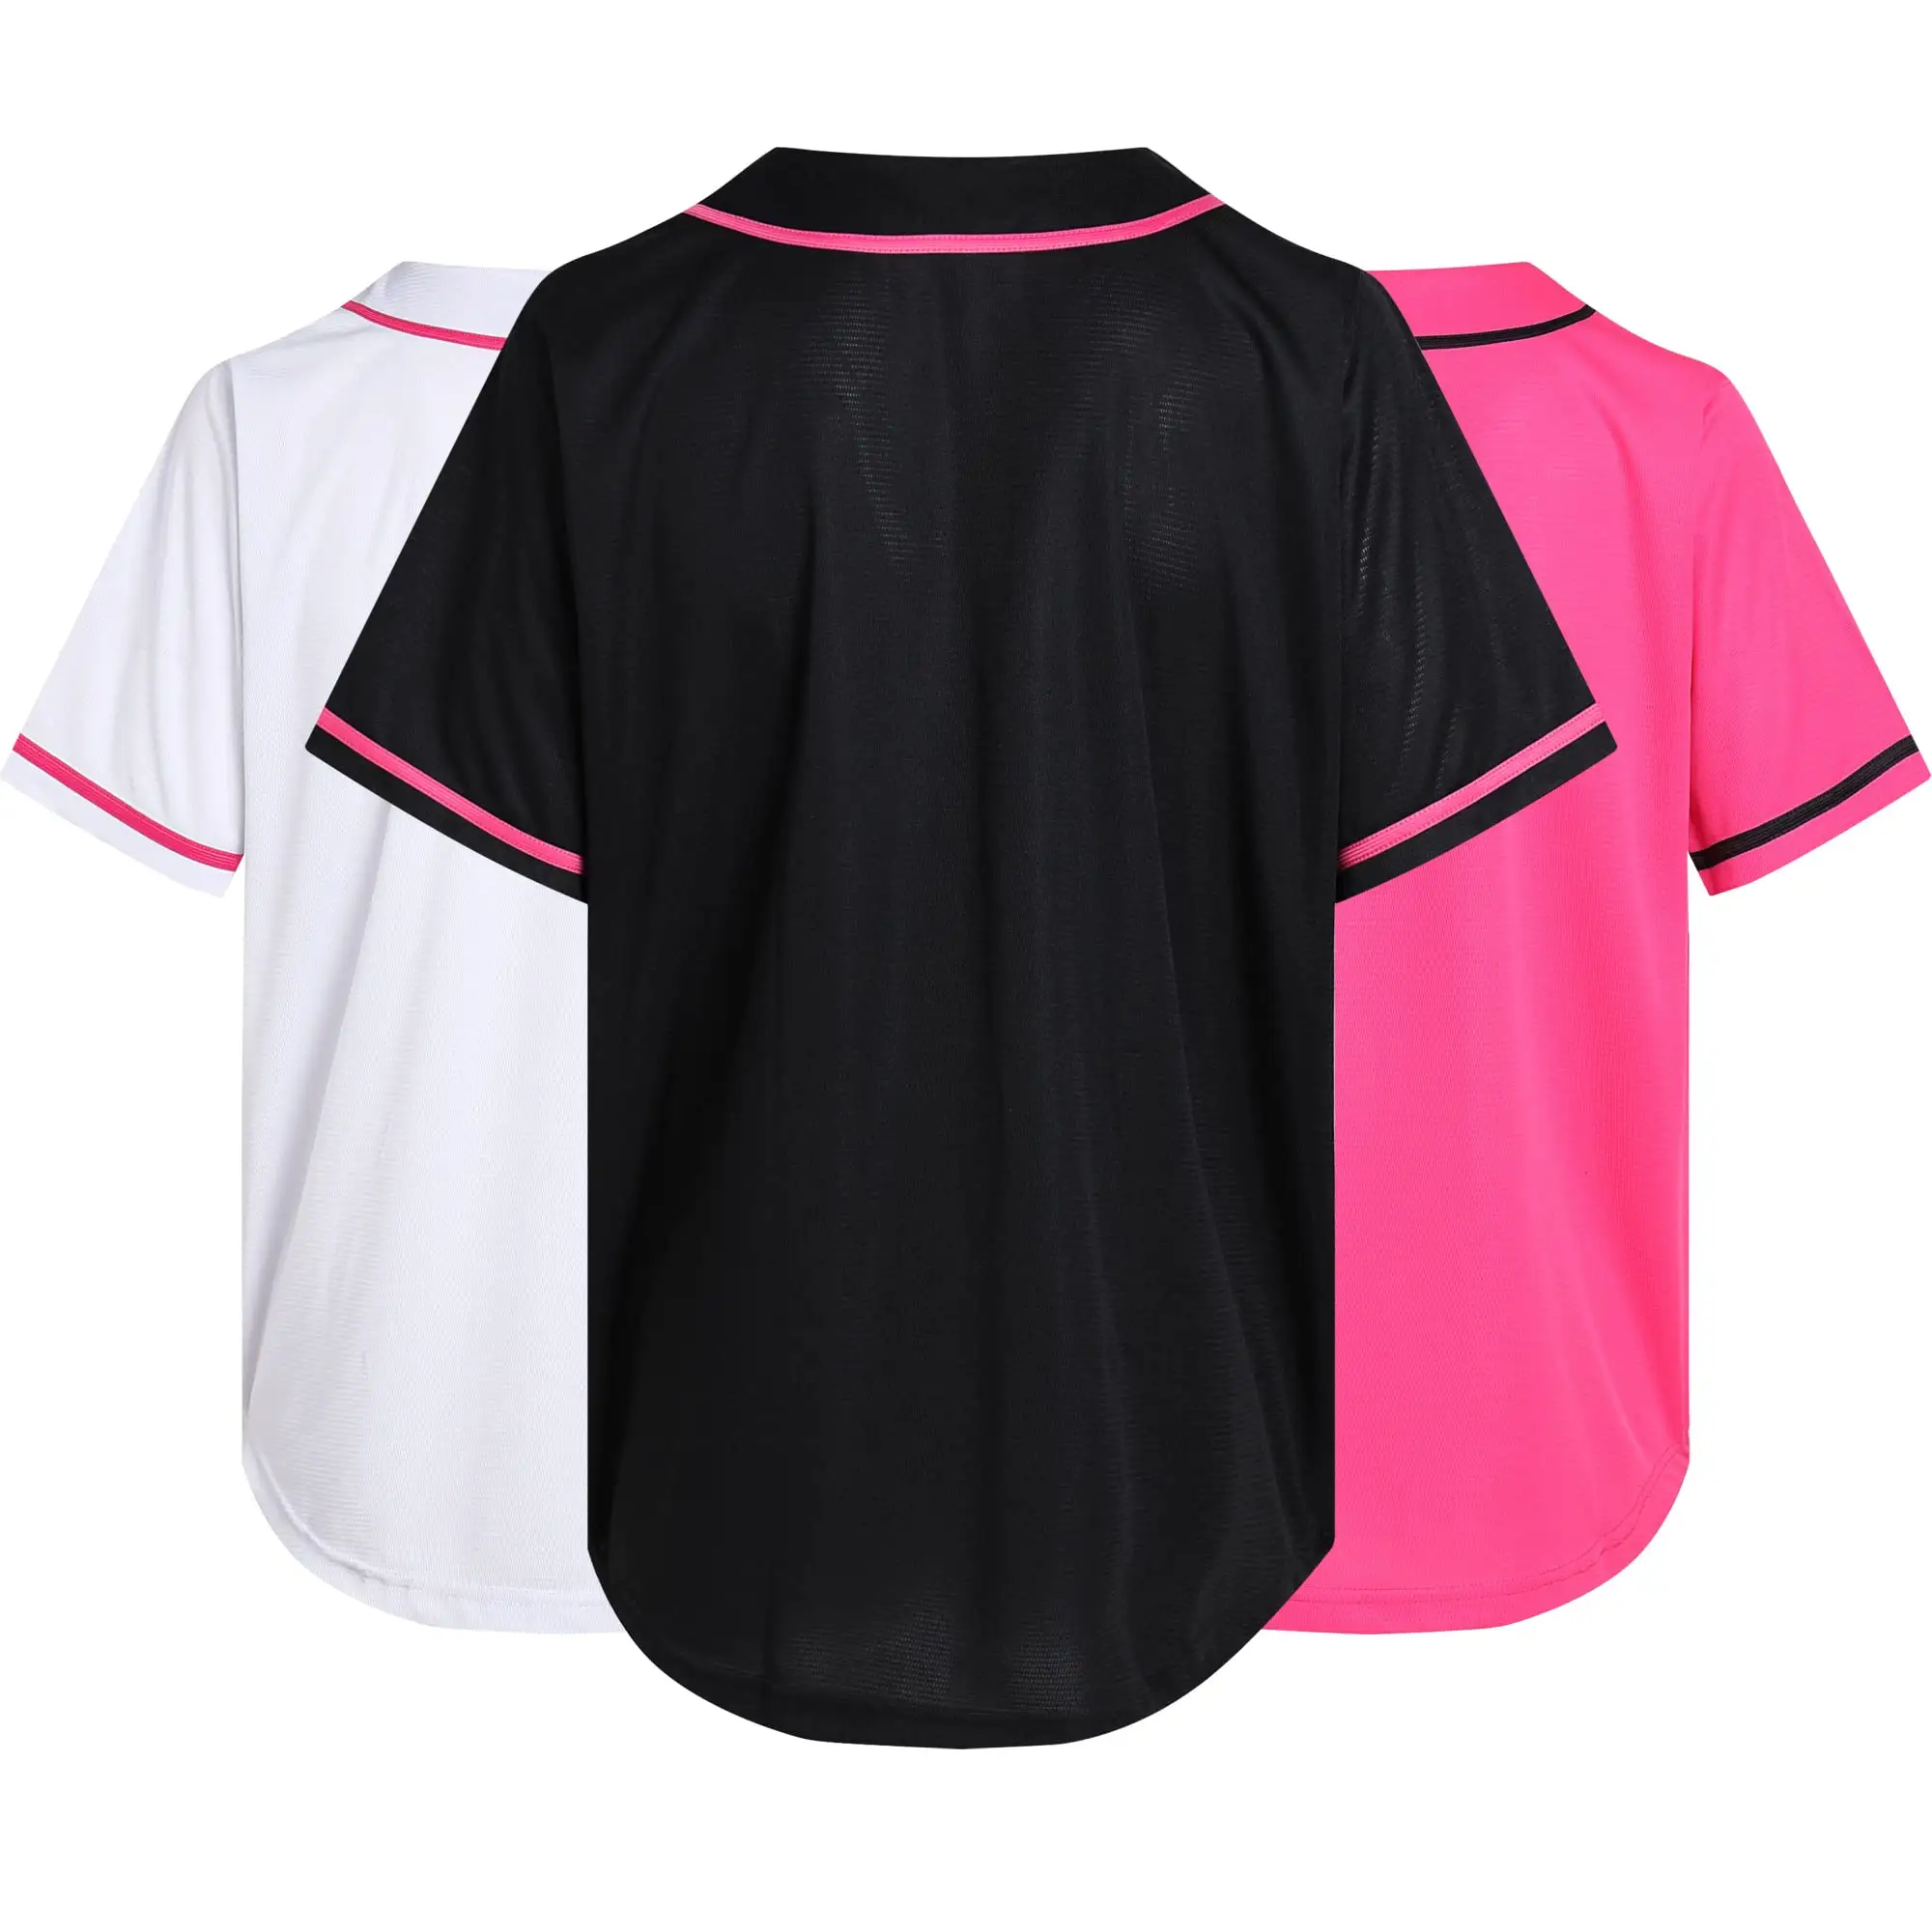 High Quality Men's Baseball Jerseys Full Button Down Shirts Sports Uniforms Tops Hip Hop Streetwear Outfits